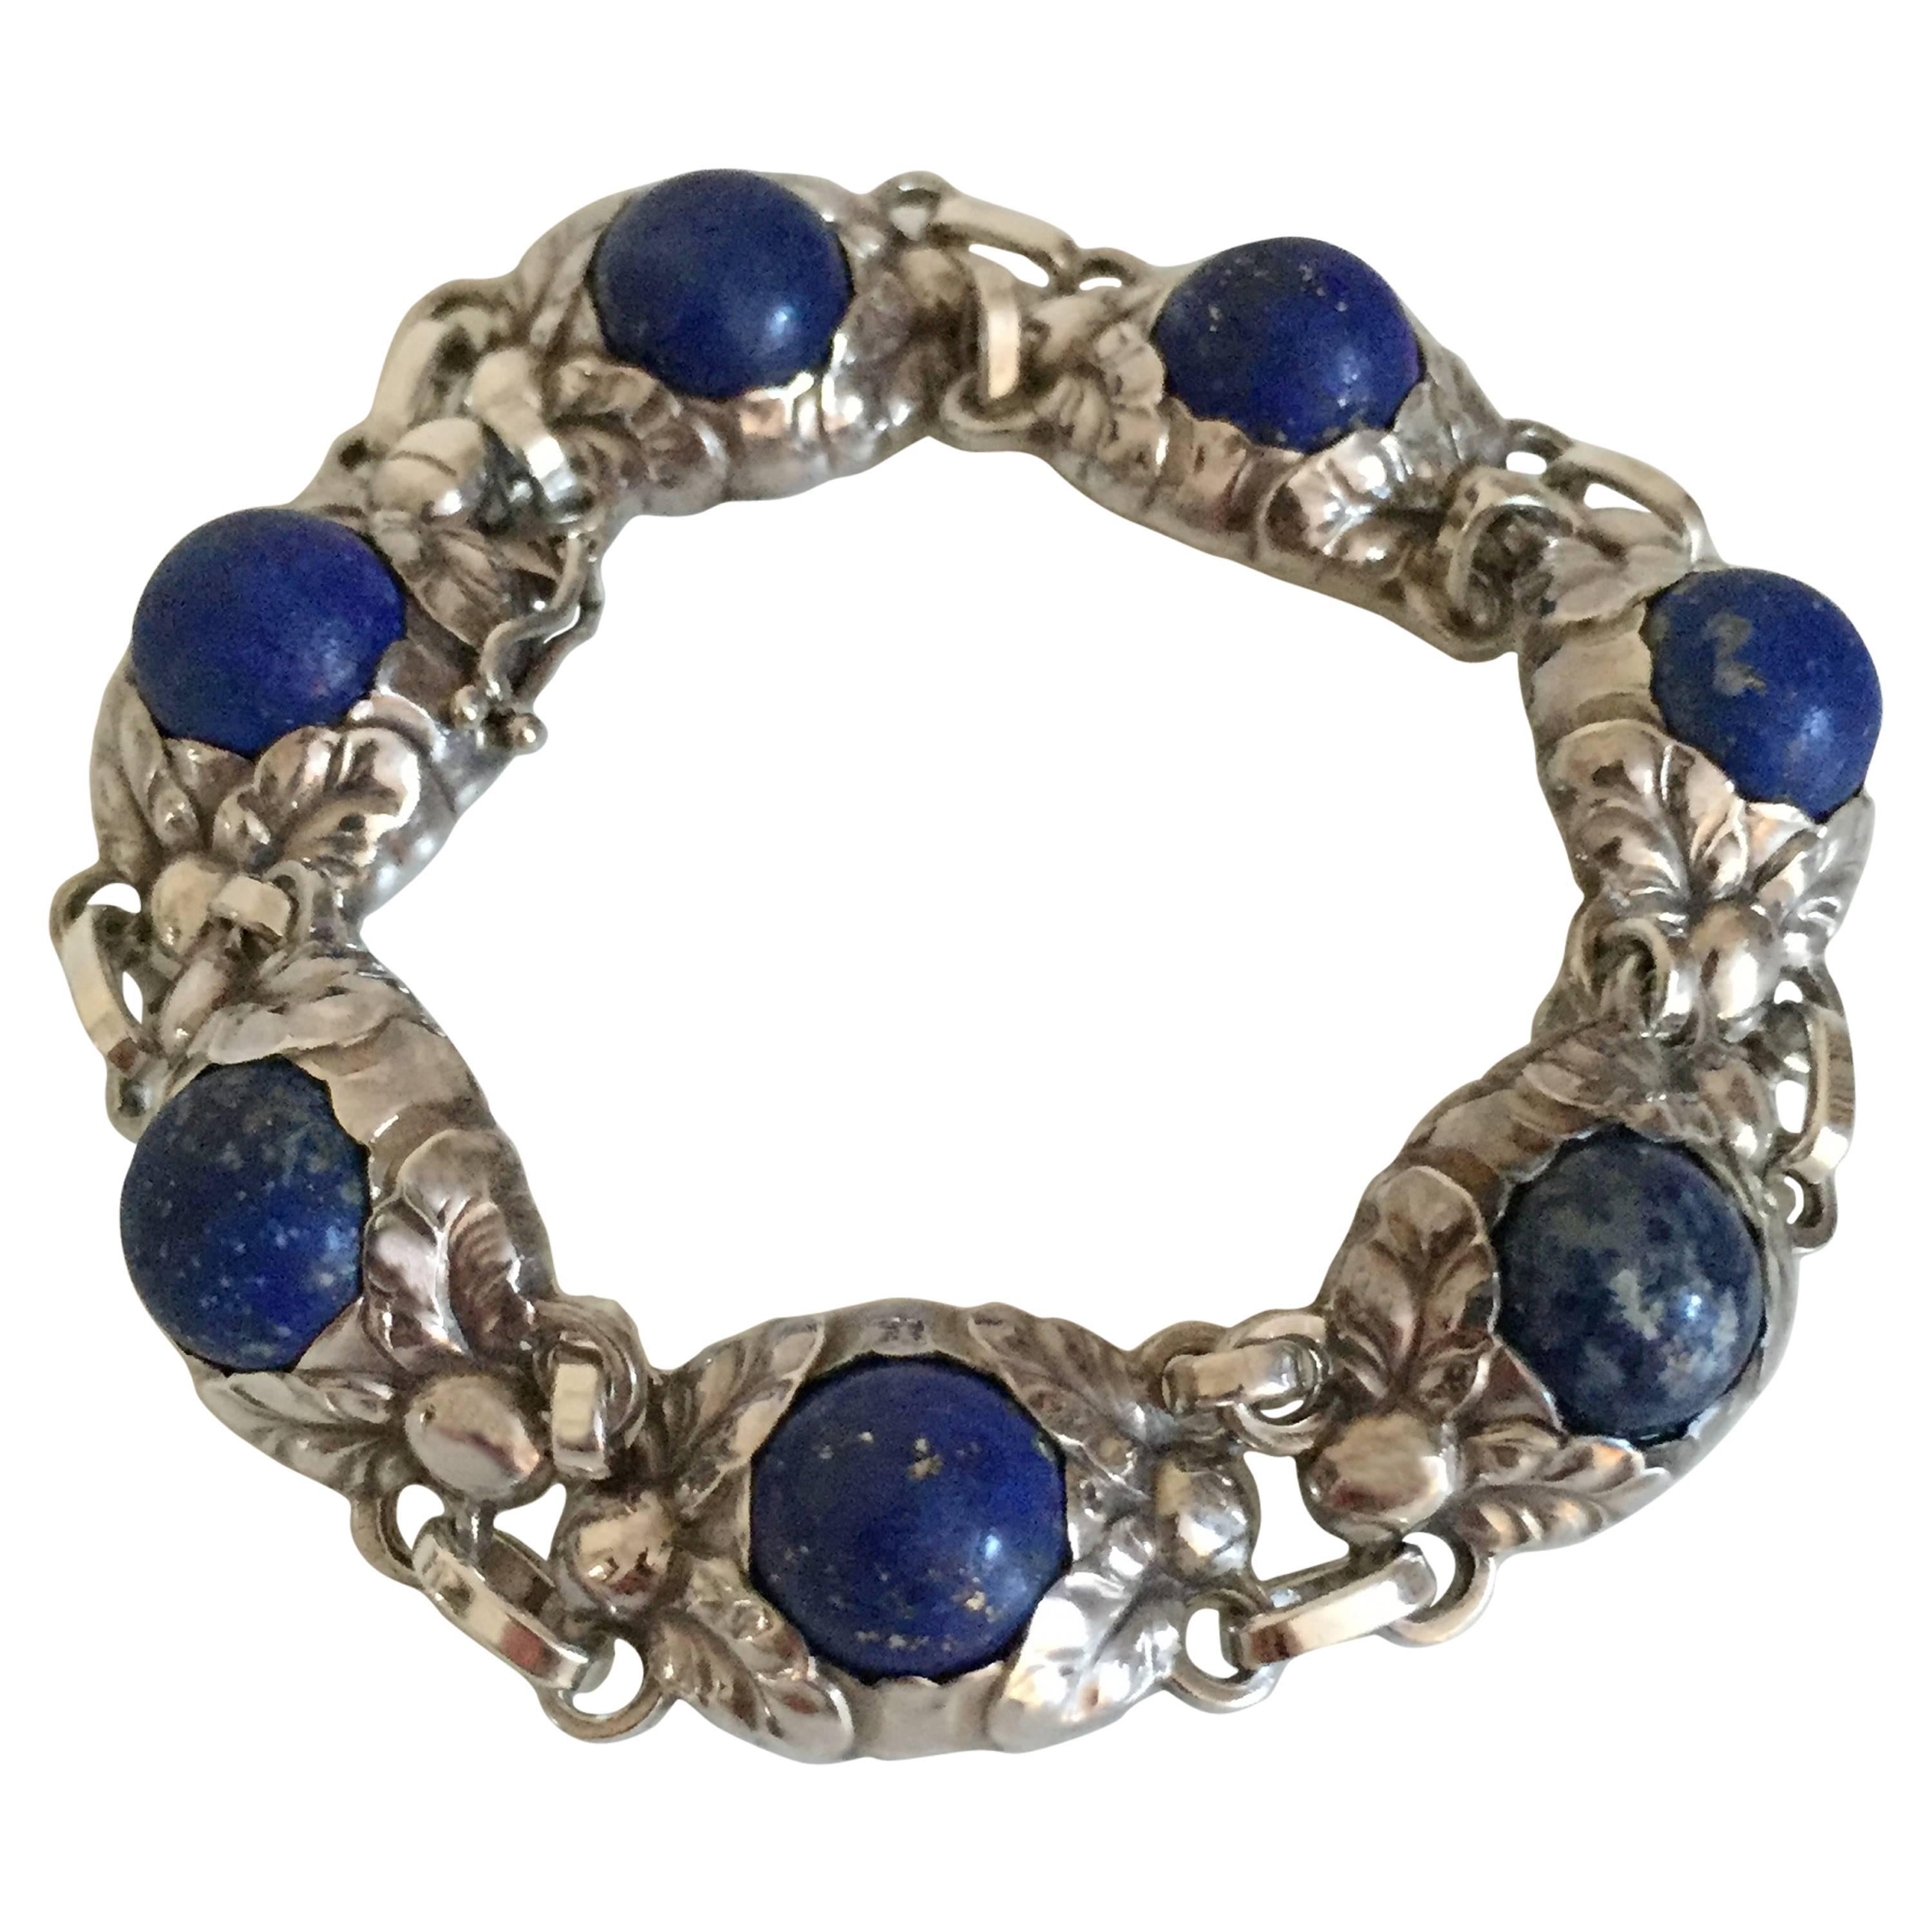 Georg Jensen Sterling Silver Bracelet with Lapis Lazuli from 1945-1951